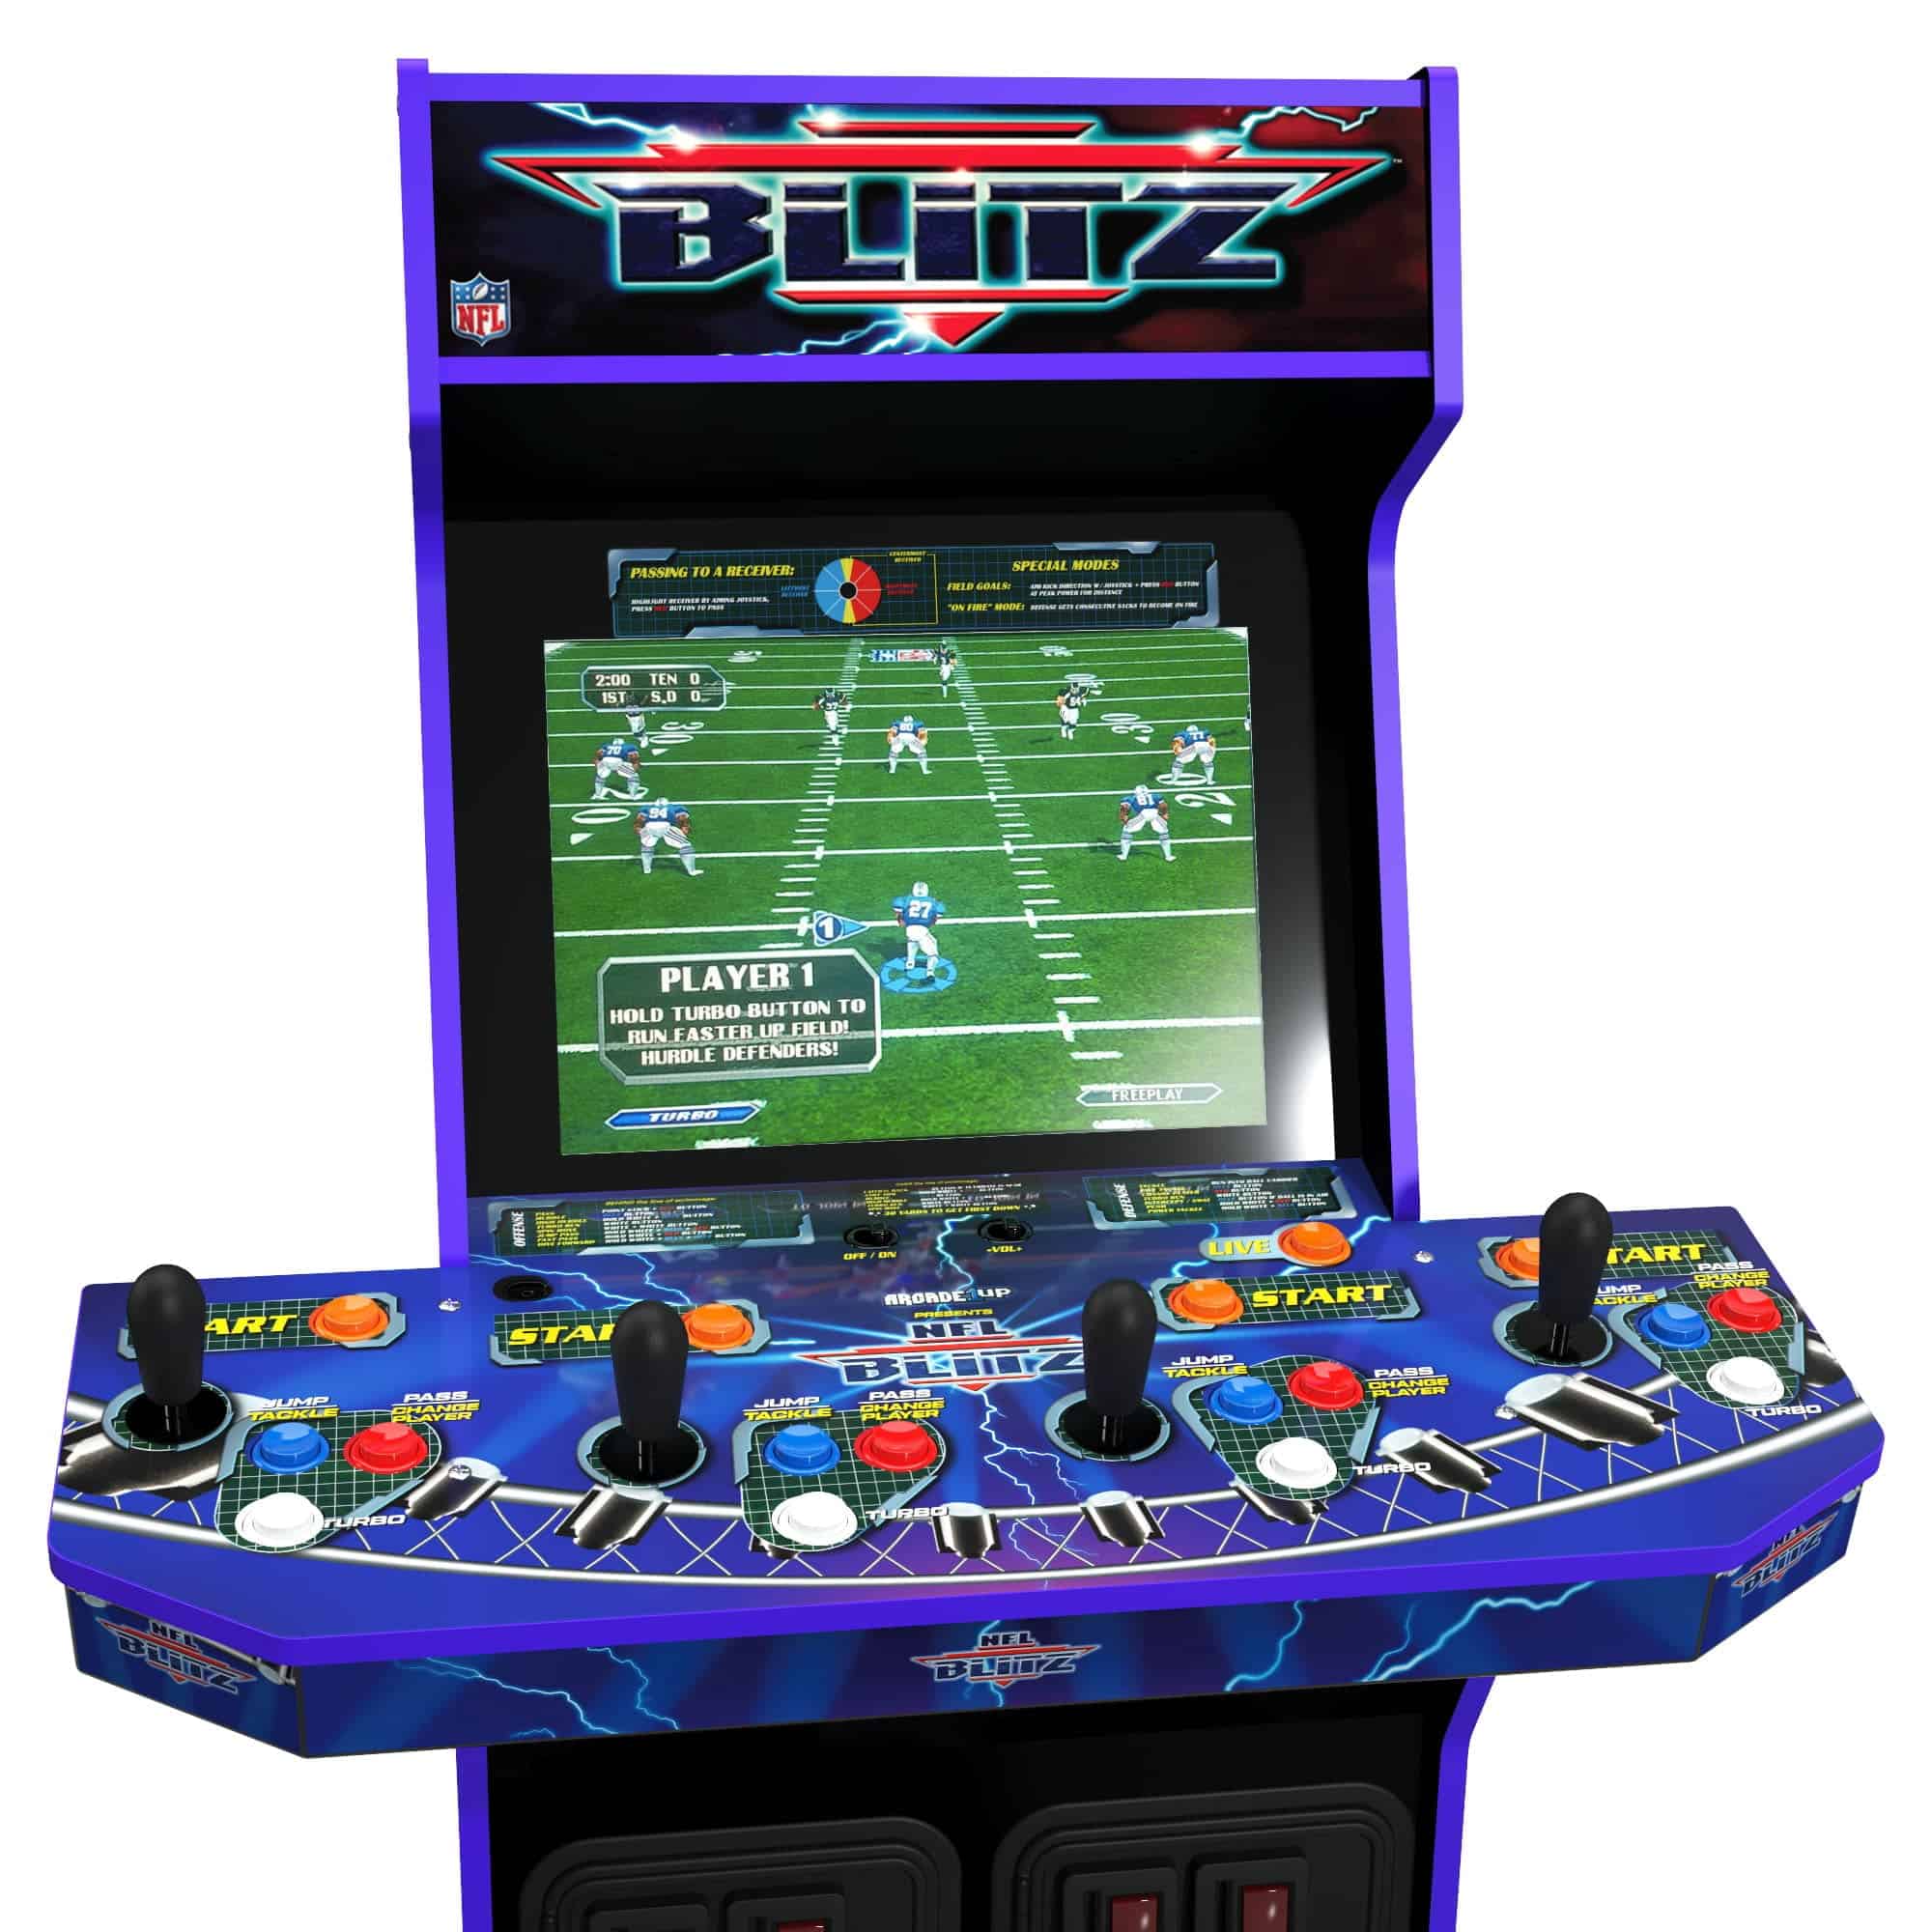 Arcade1up Blitz Arcade System